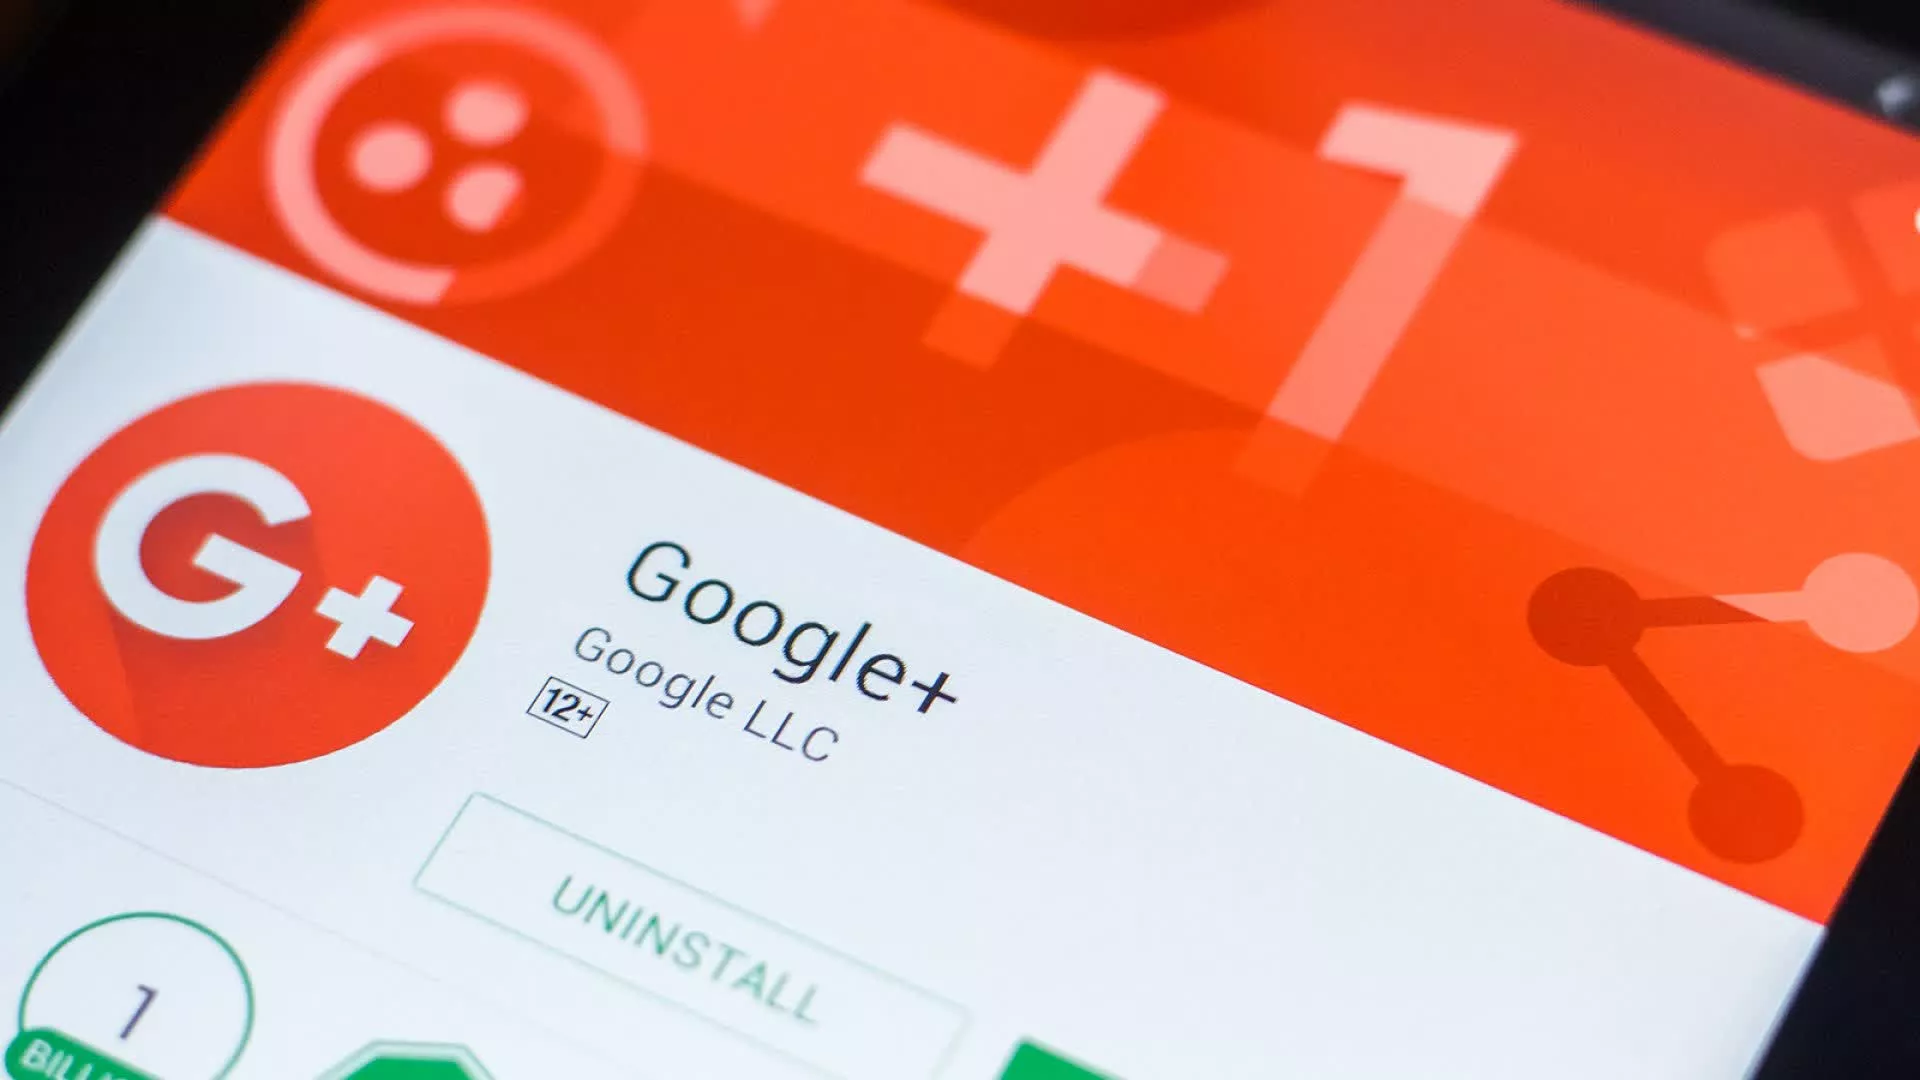 Google+ will shut down again in 2023 | TechSpot